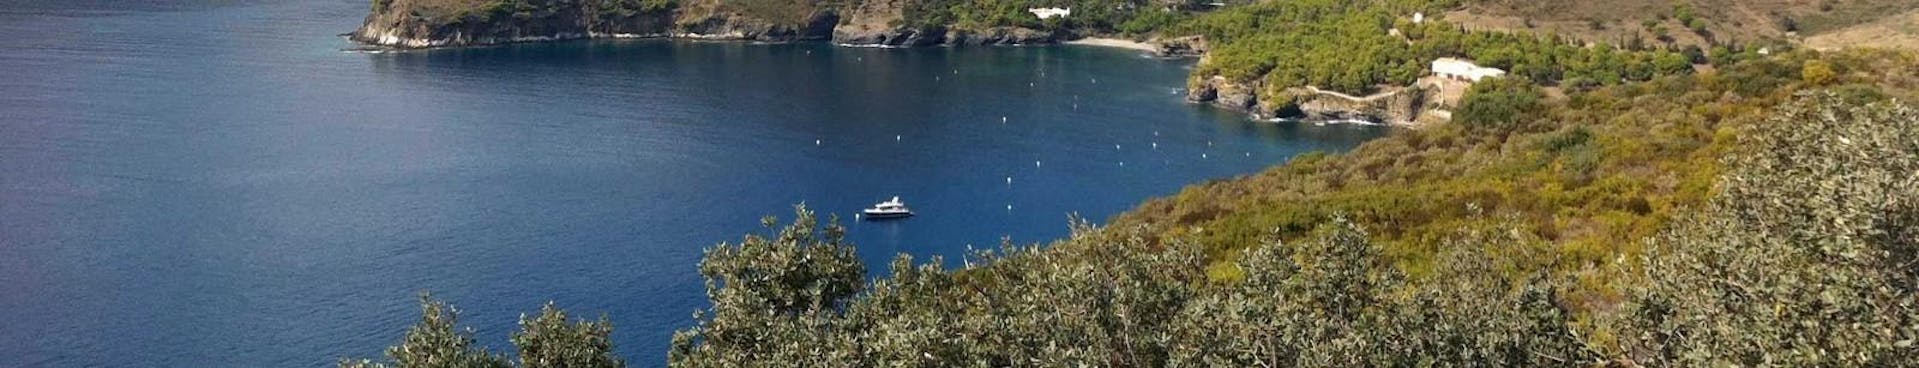 Excursion en catamaran au Cap Norfeu et à Cadaqués avec plongée en apnée avec Magic Catamarans Mallorca